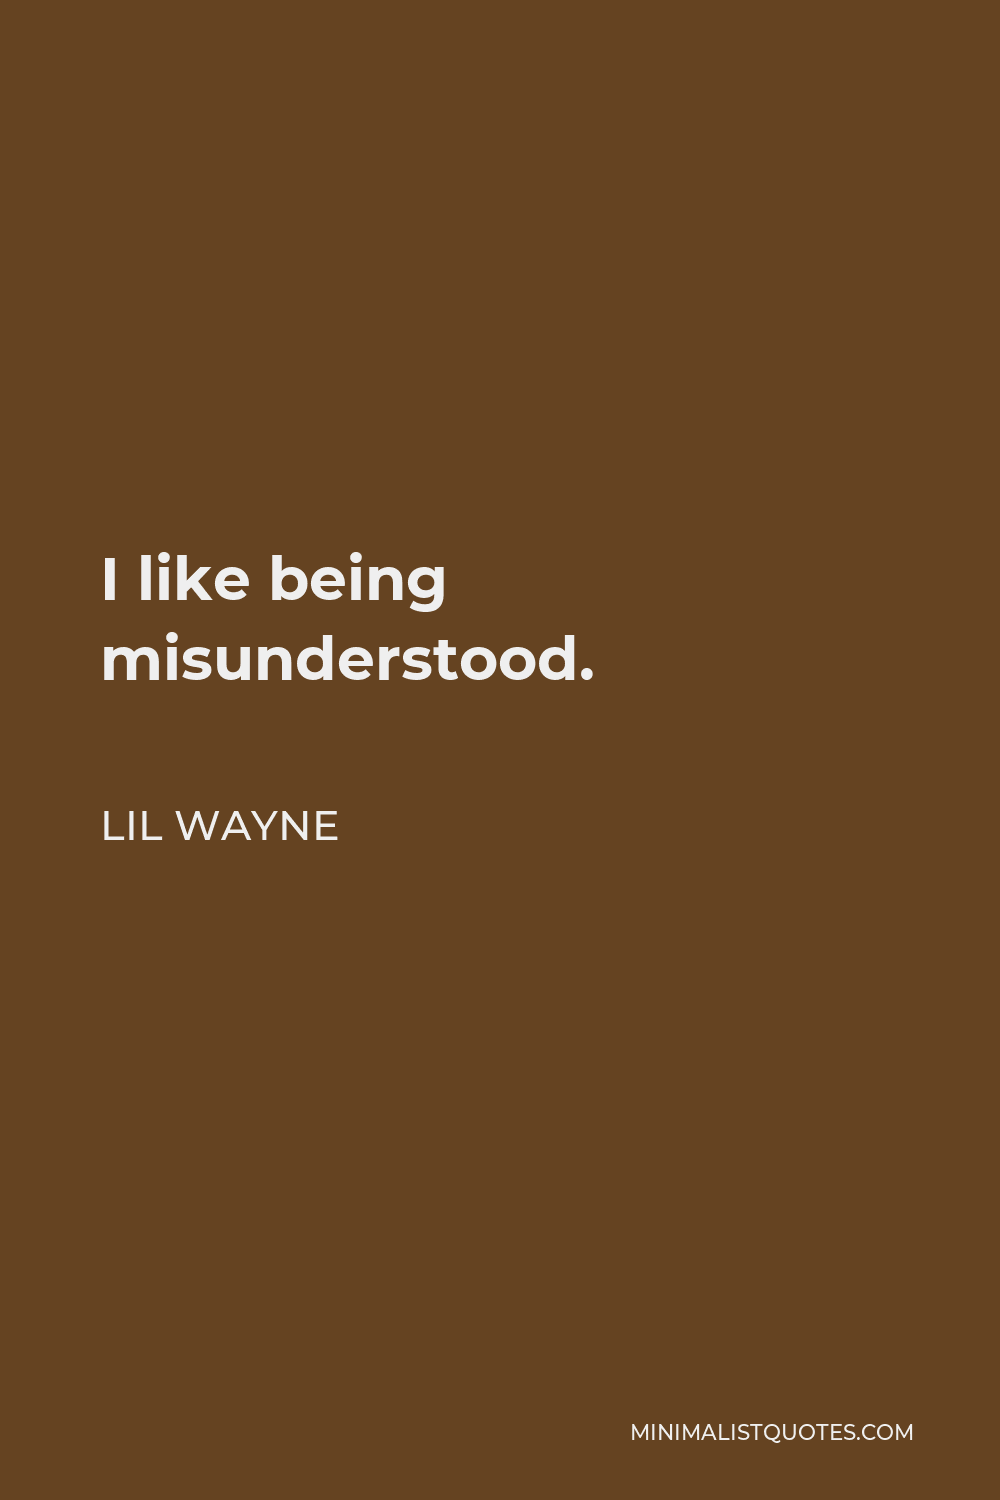 Lil Wayne Quote - I like being misunderstood.